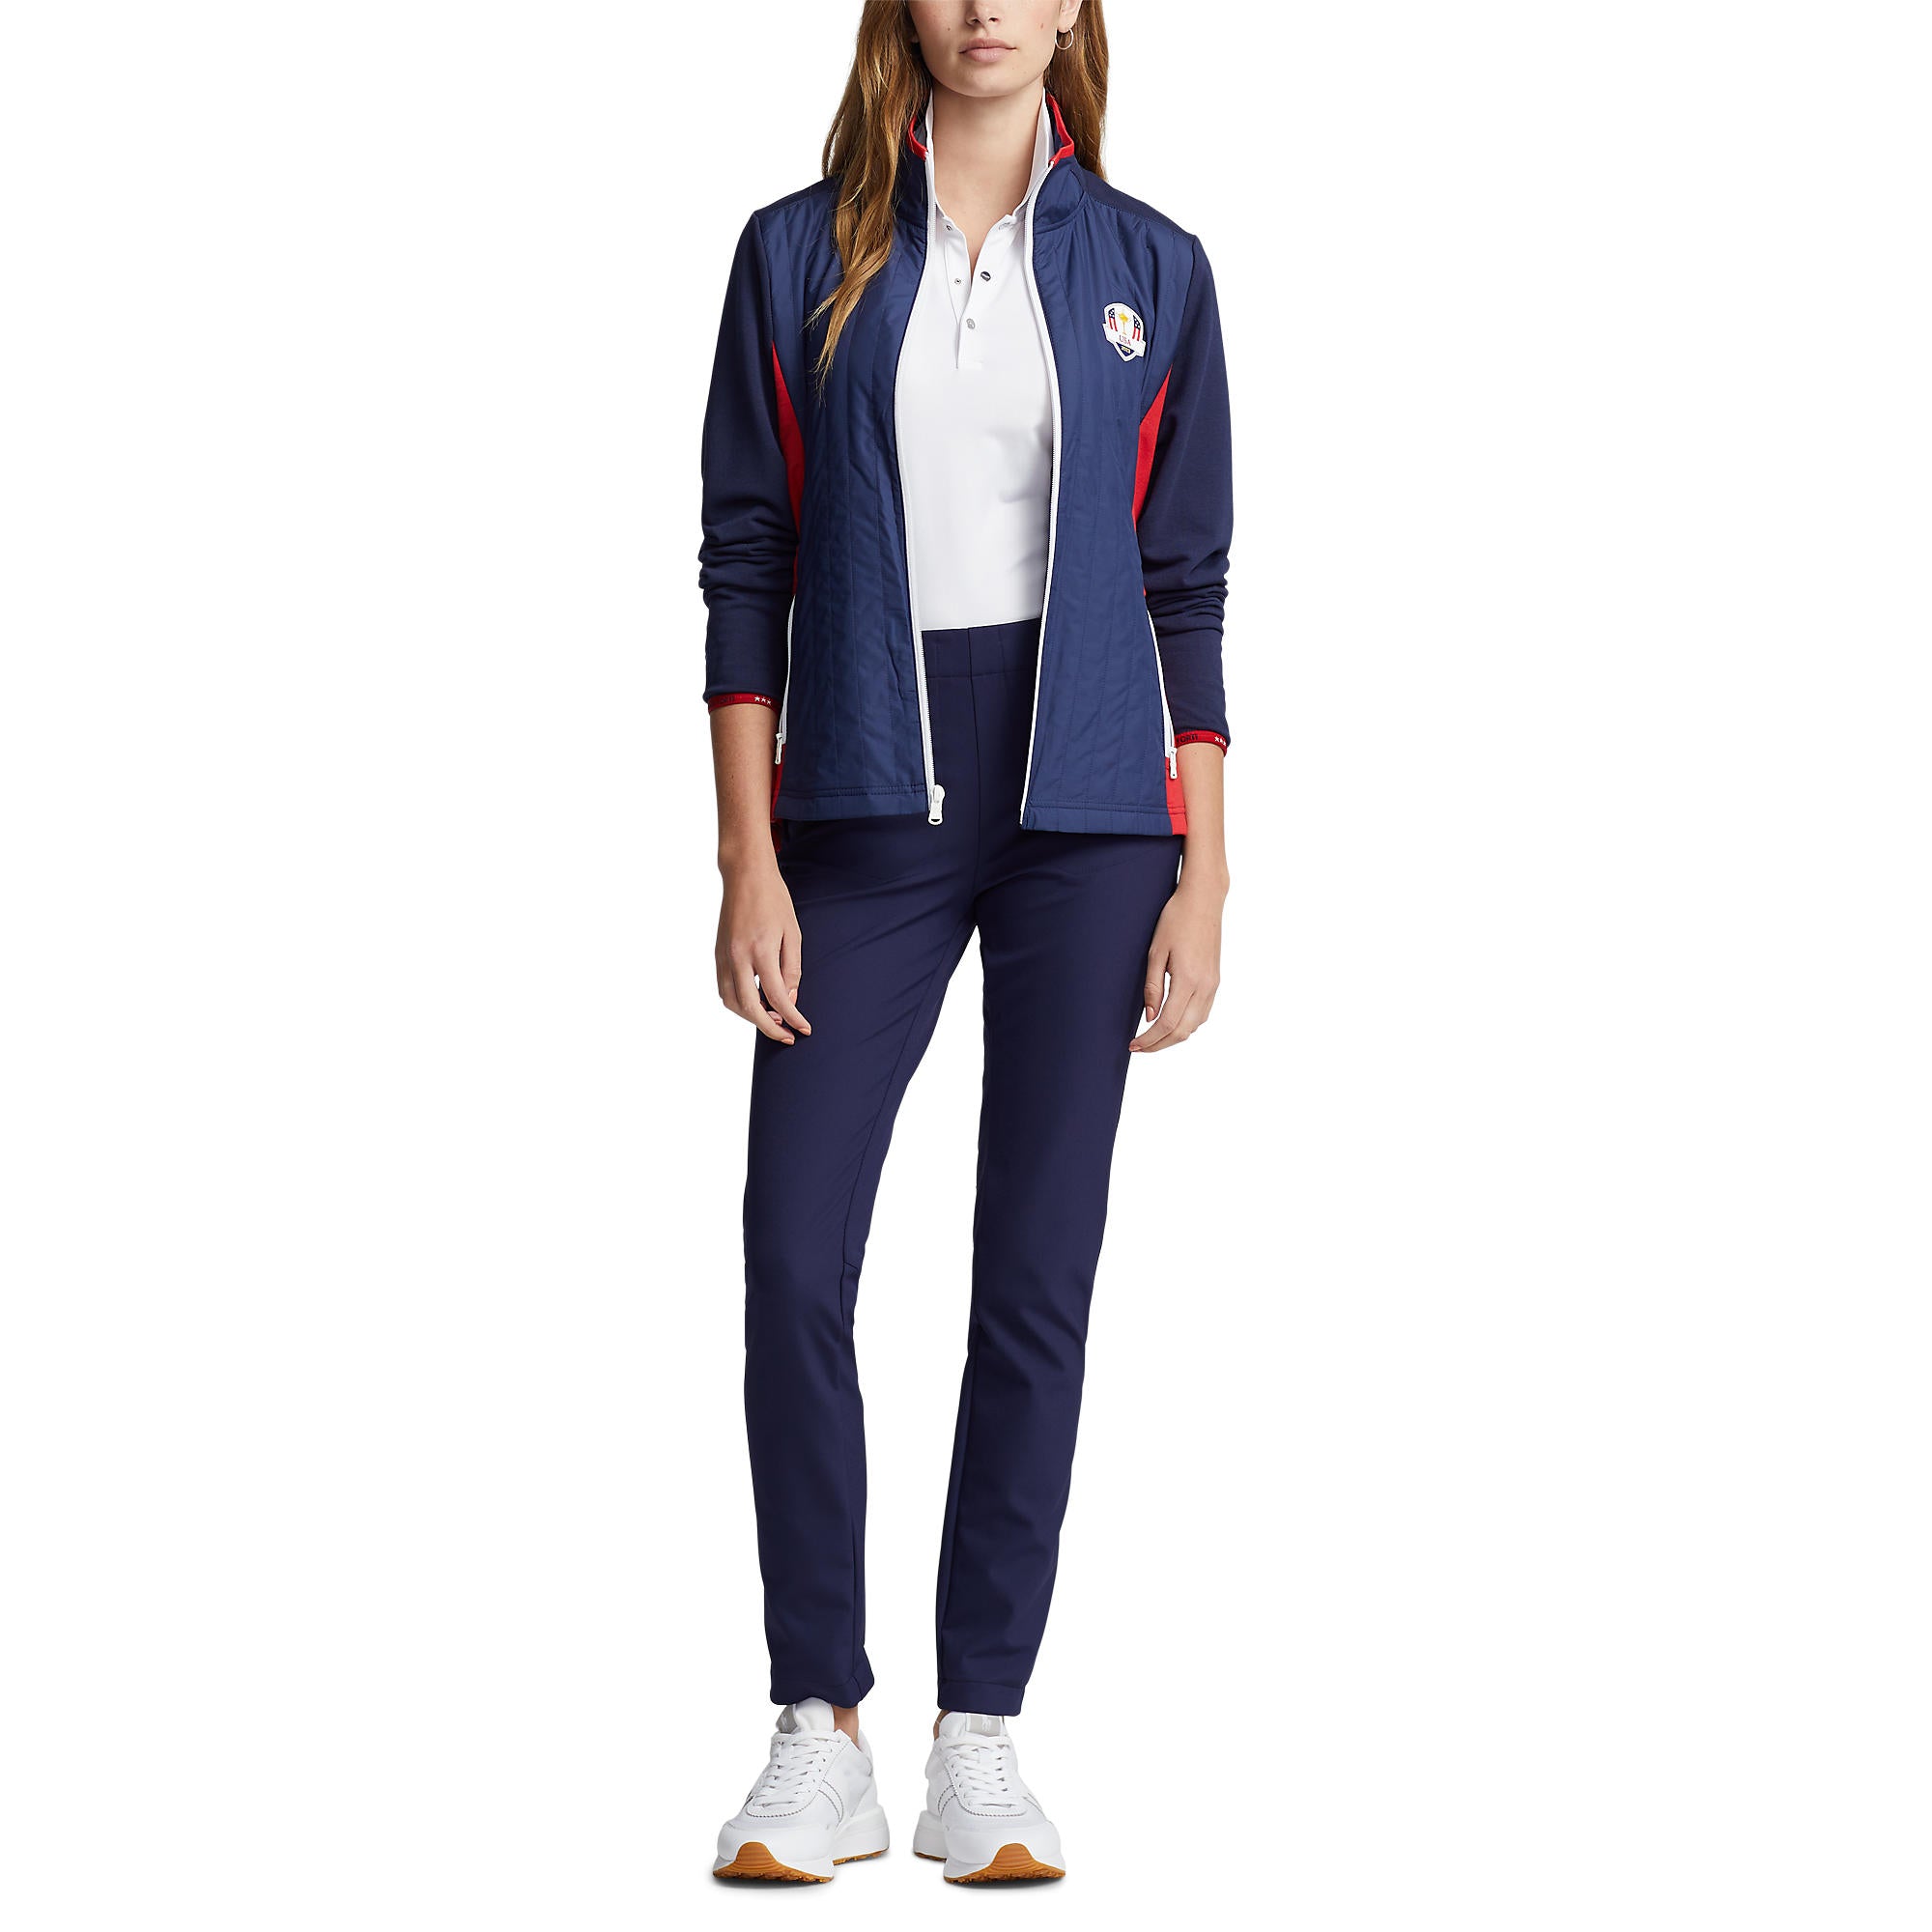 Ralph Lauren 2023 Ryder Cup Official Team Uniform Women's Full Zip Jacket / X-Large